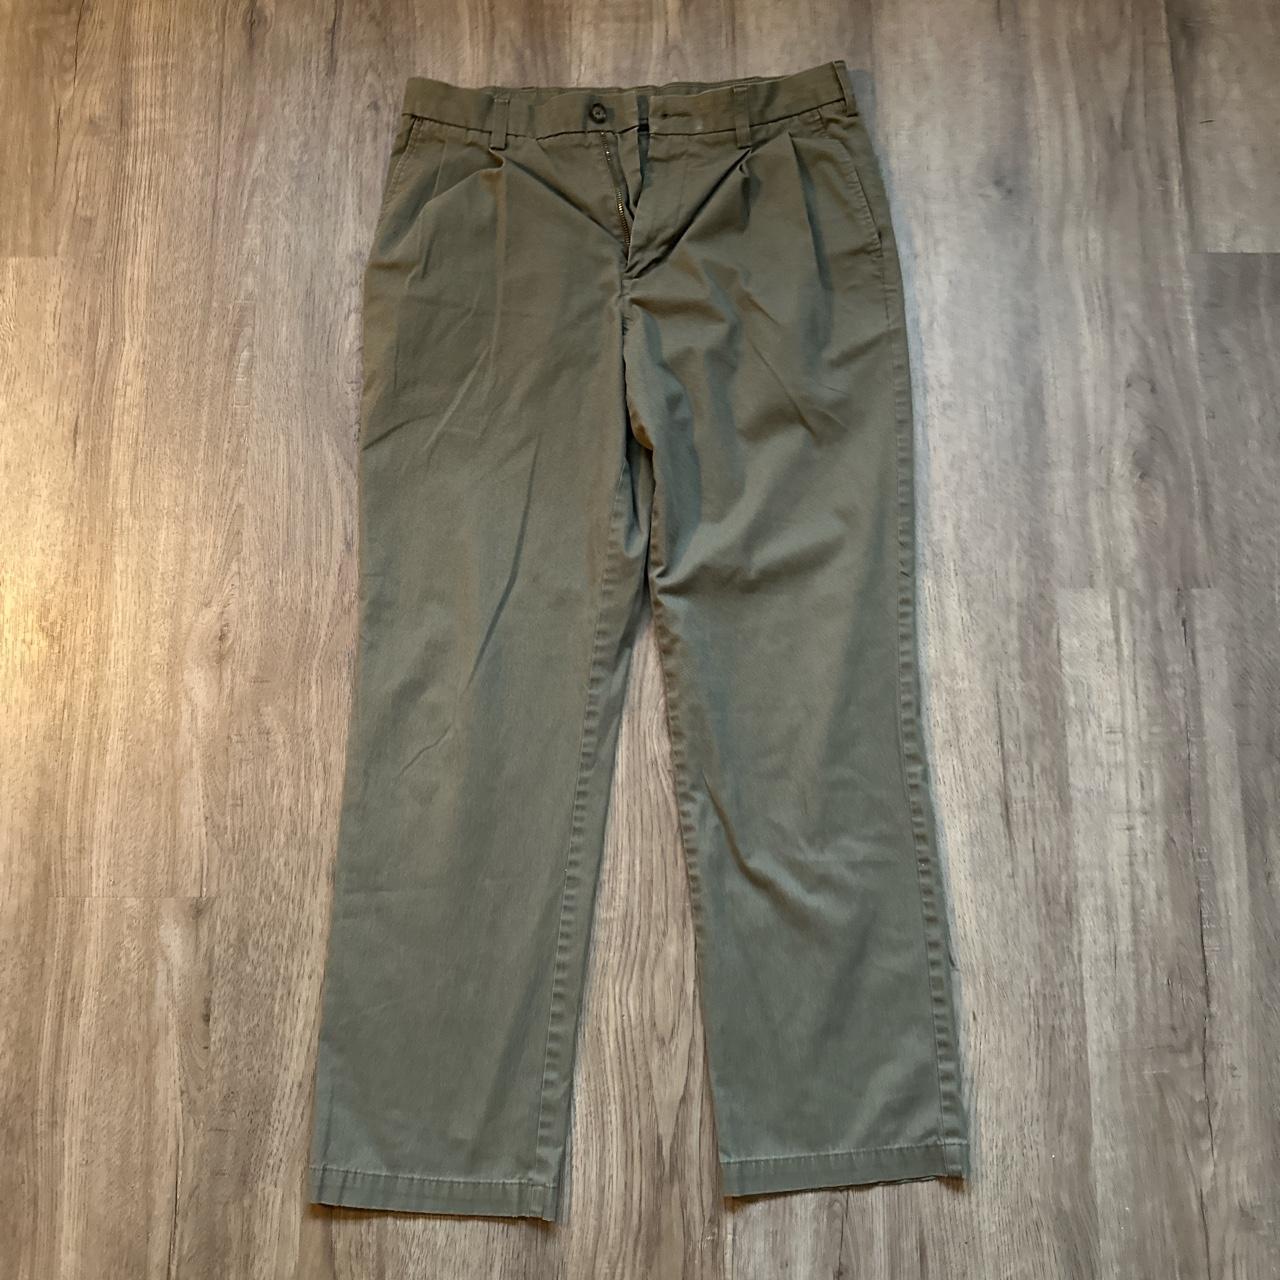 Croft & Barrow Classic Fit Pants size 32x32 - Depop